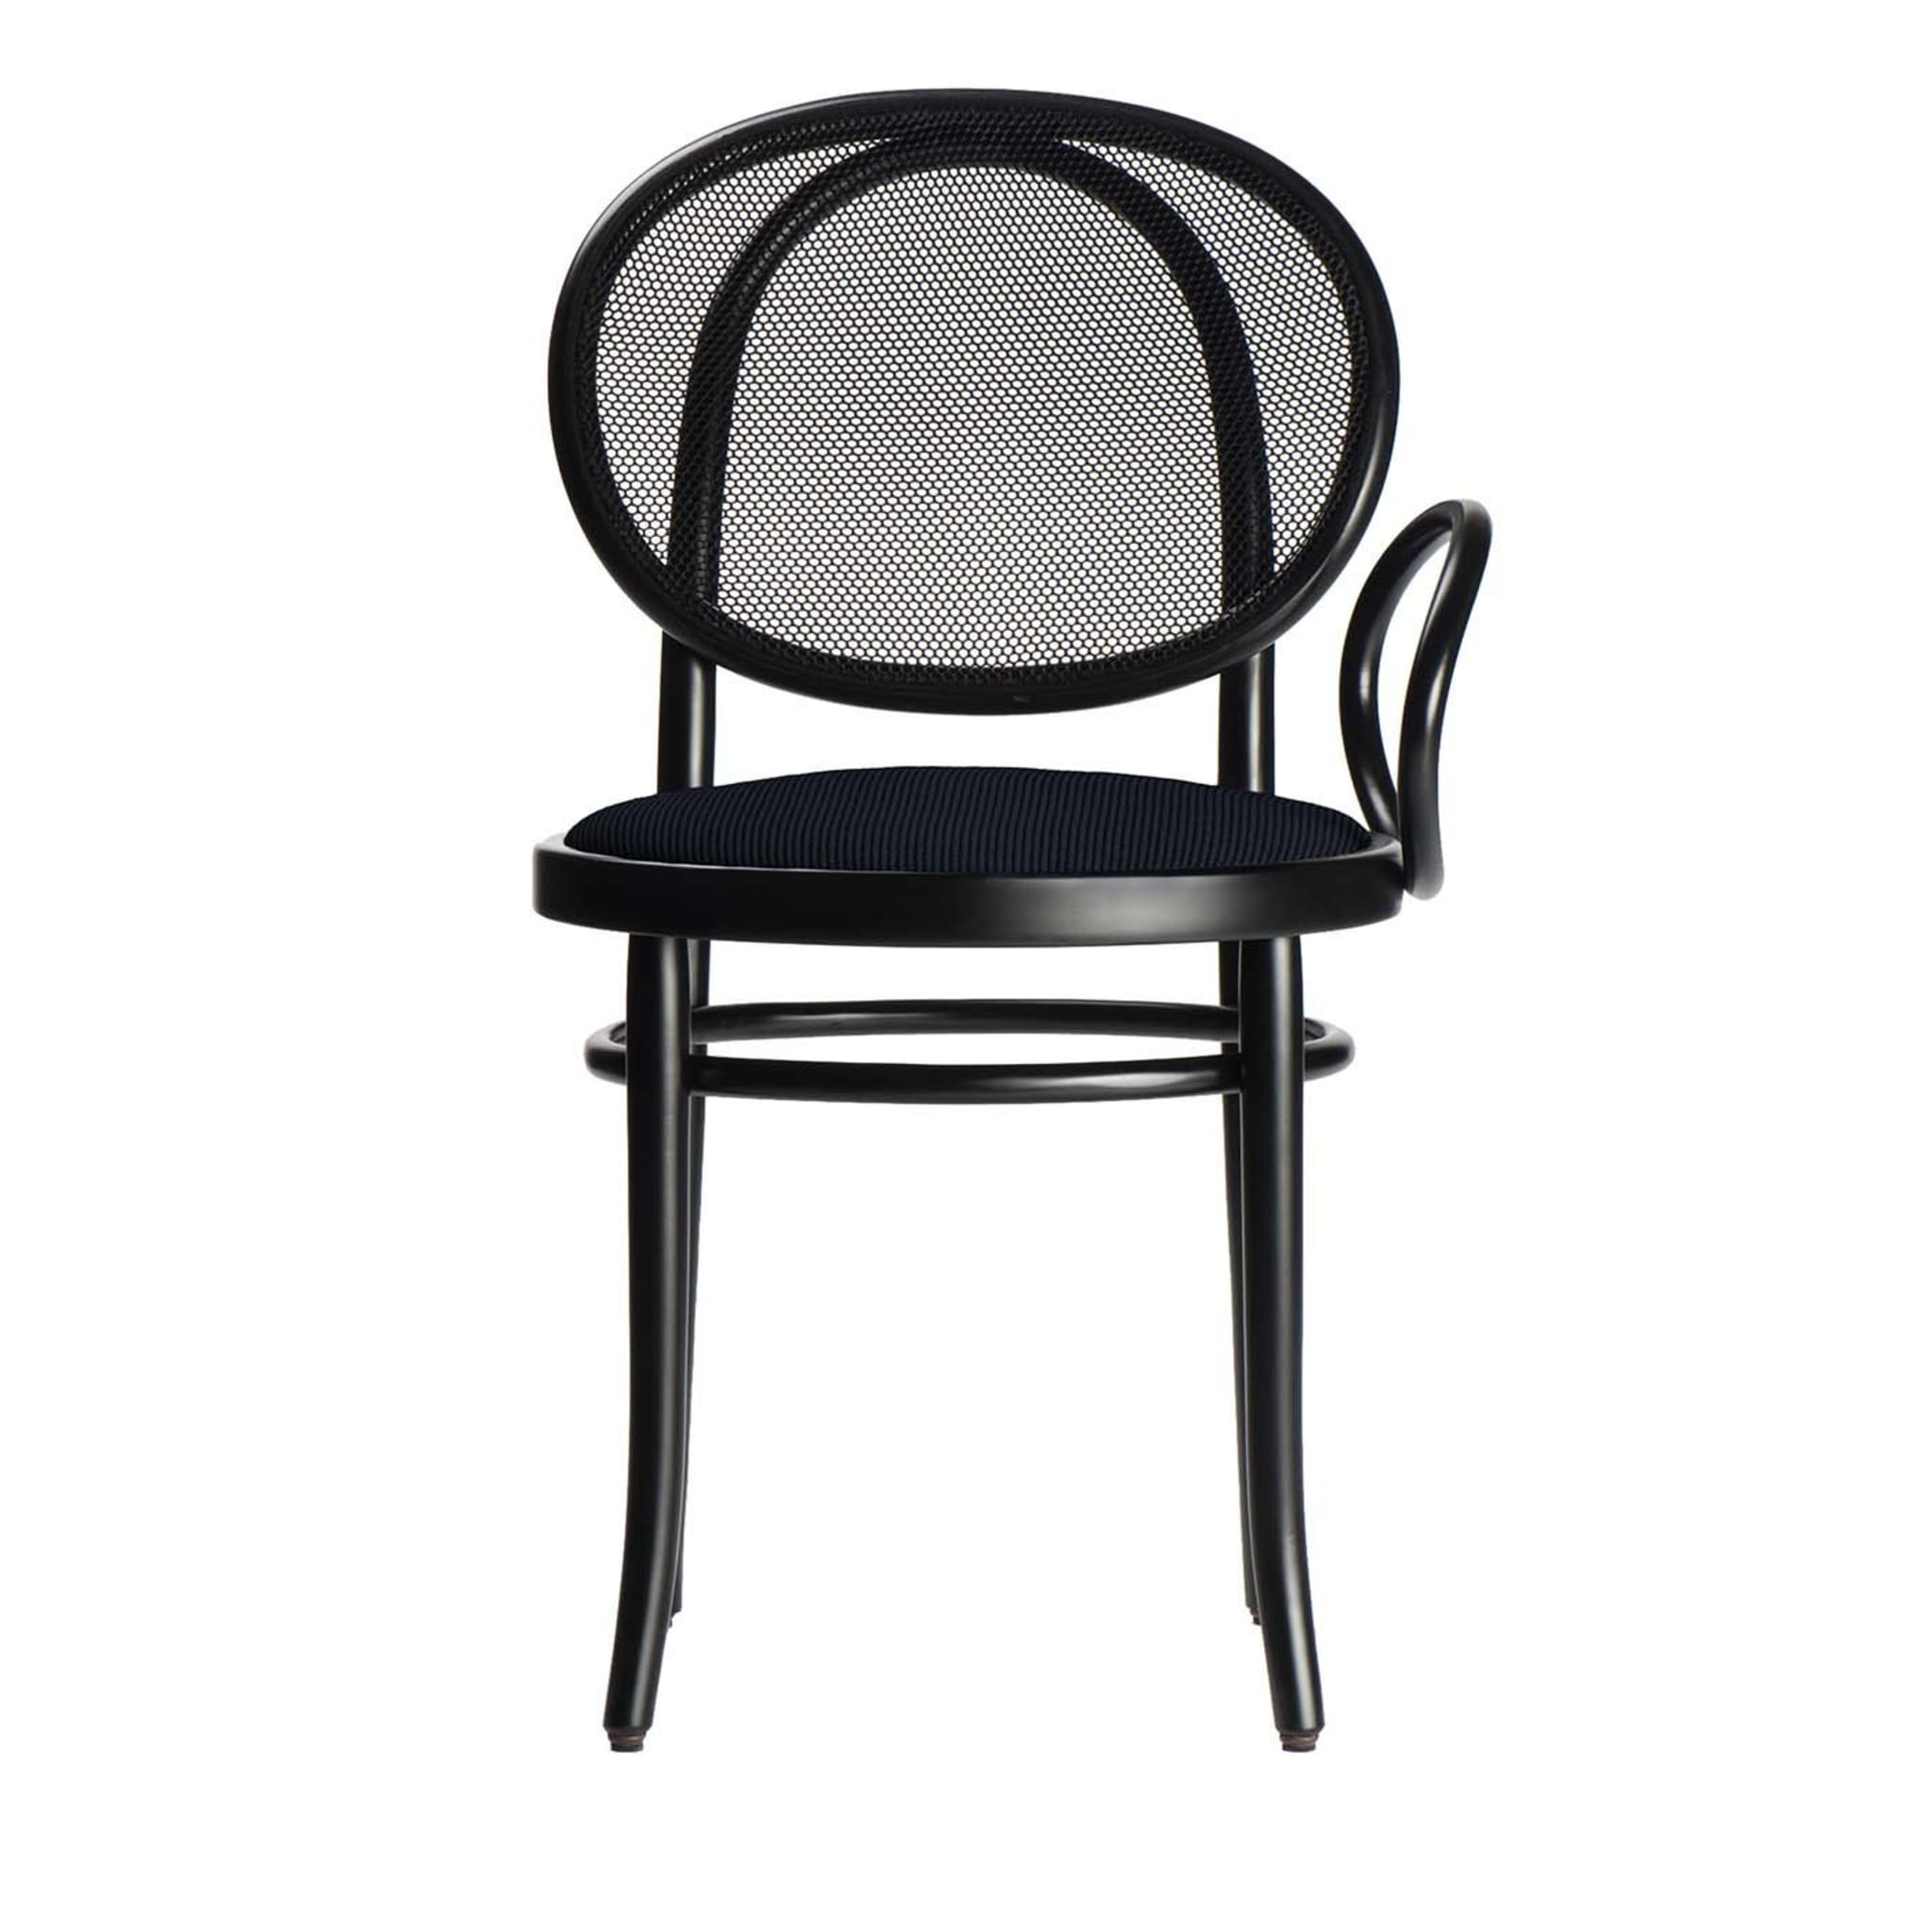 No. 0 Black Chair by Front - Vue principale